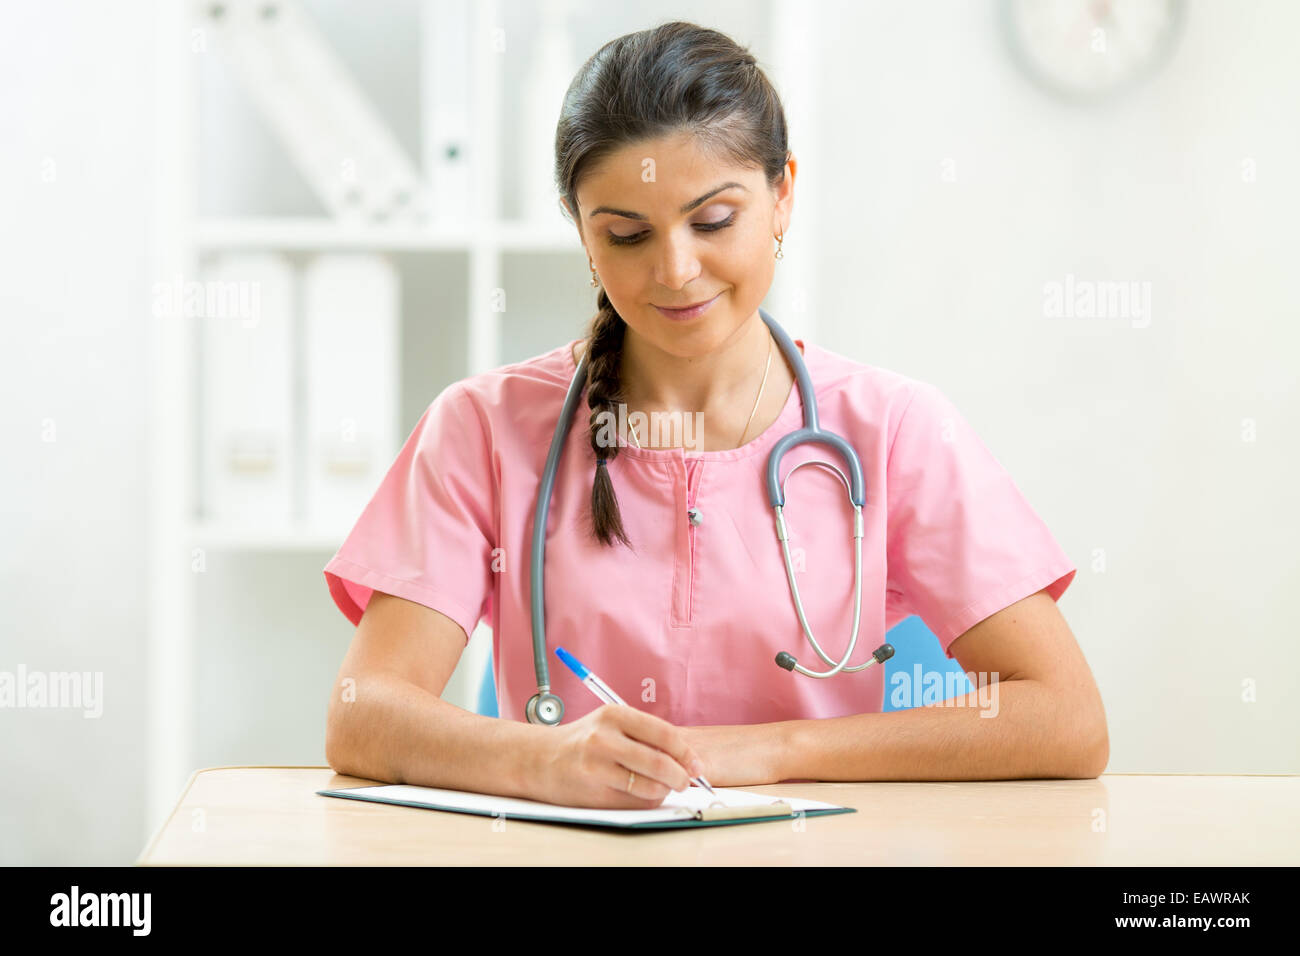 Female doctor sitting at desk in doctor's room Banque D'Images